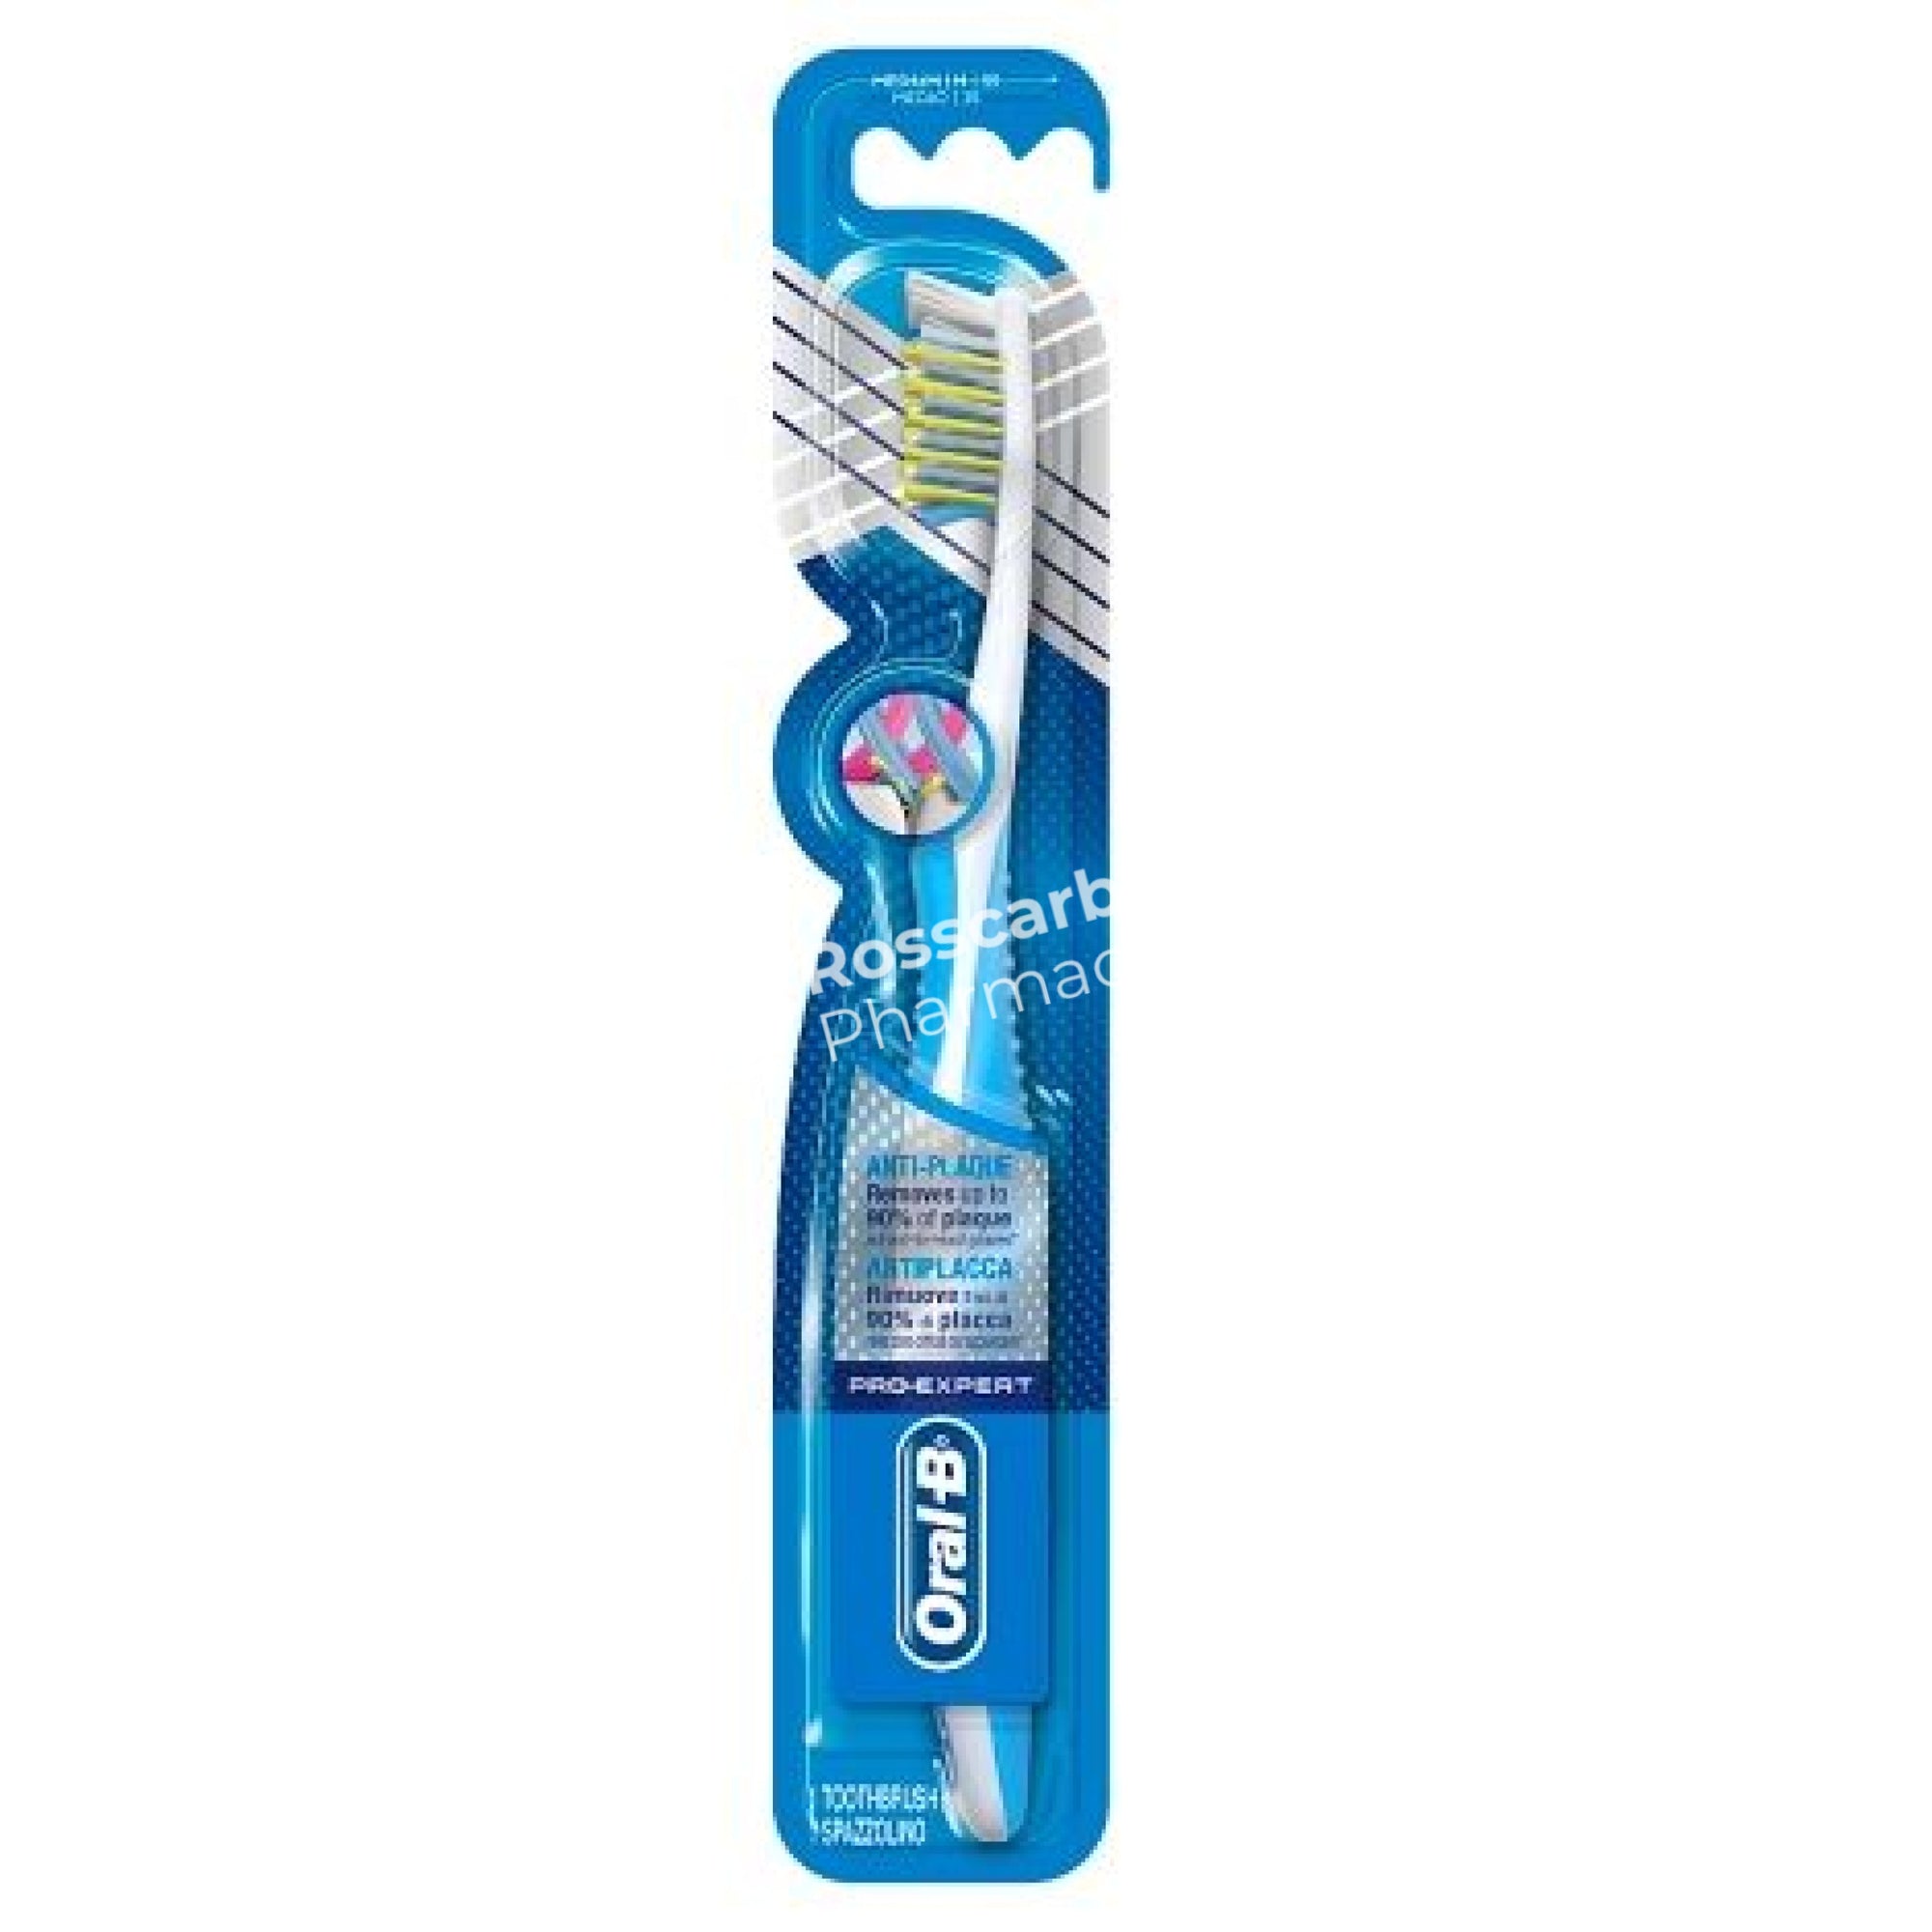 Oral-B Pro-Expert Anti-Plaque Medium Toothbrush Toothbrushes